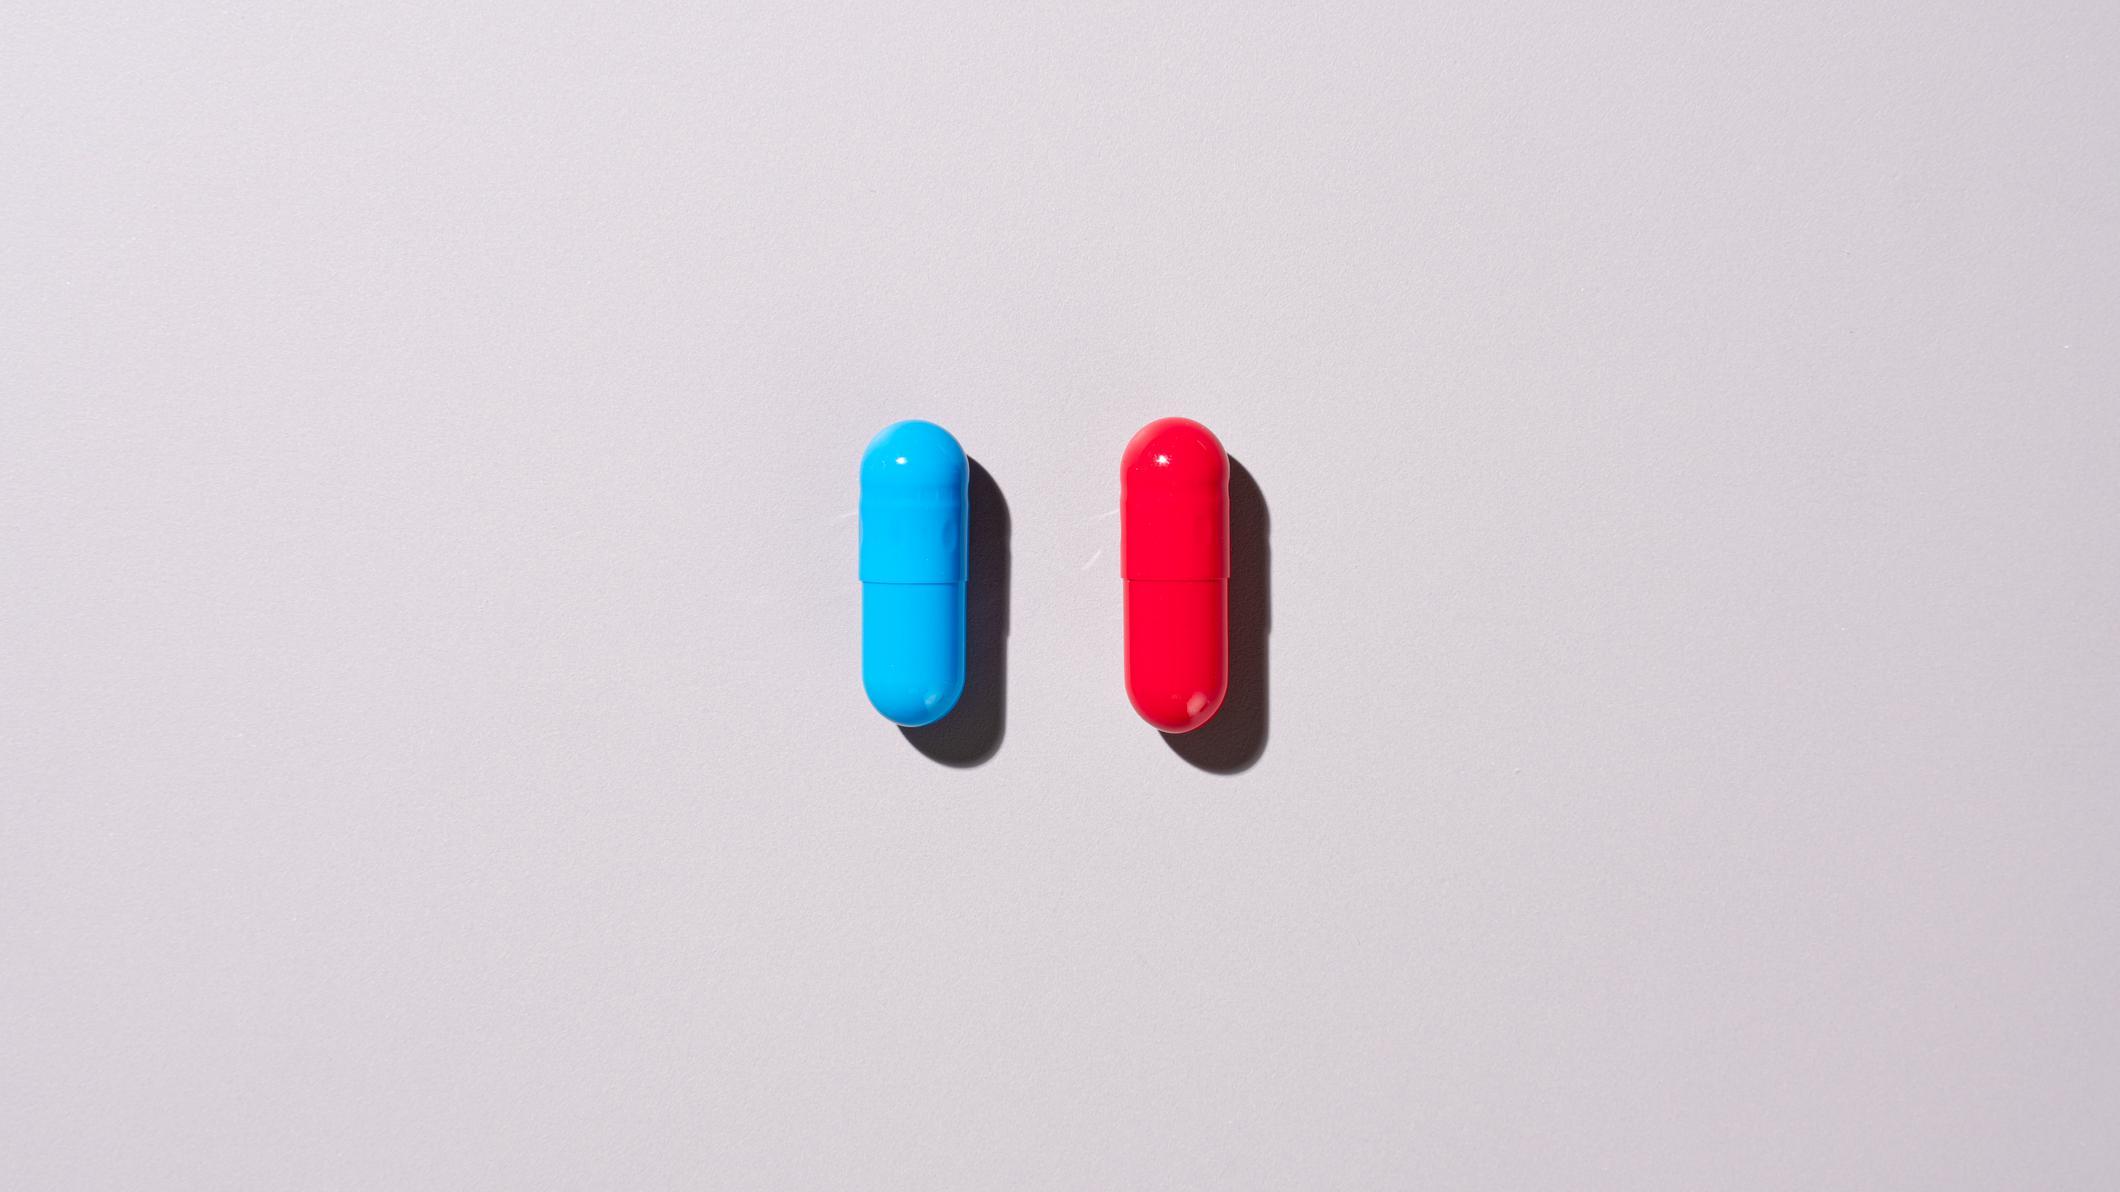 Pílula azul e pílula vermelha